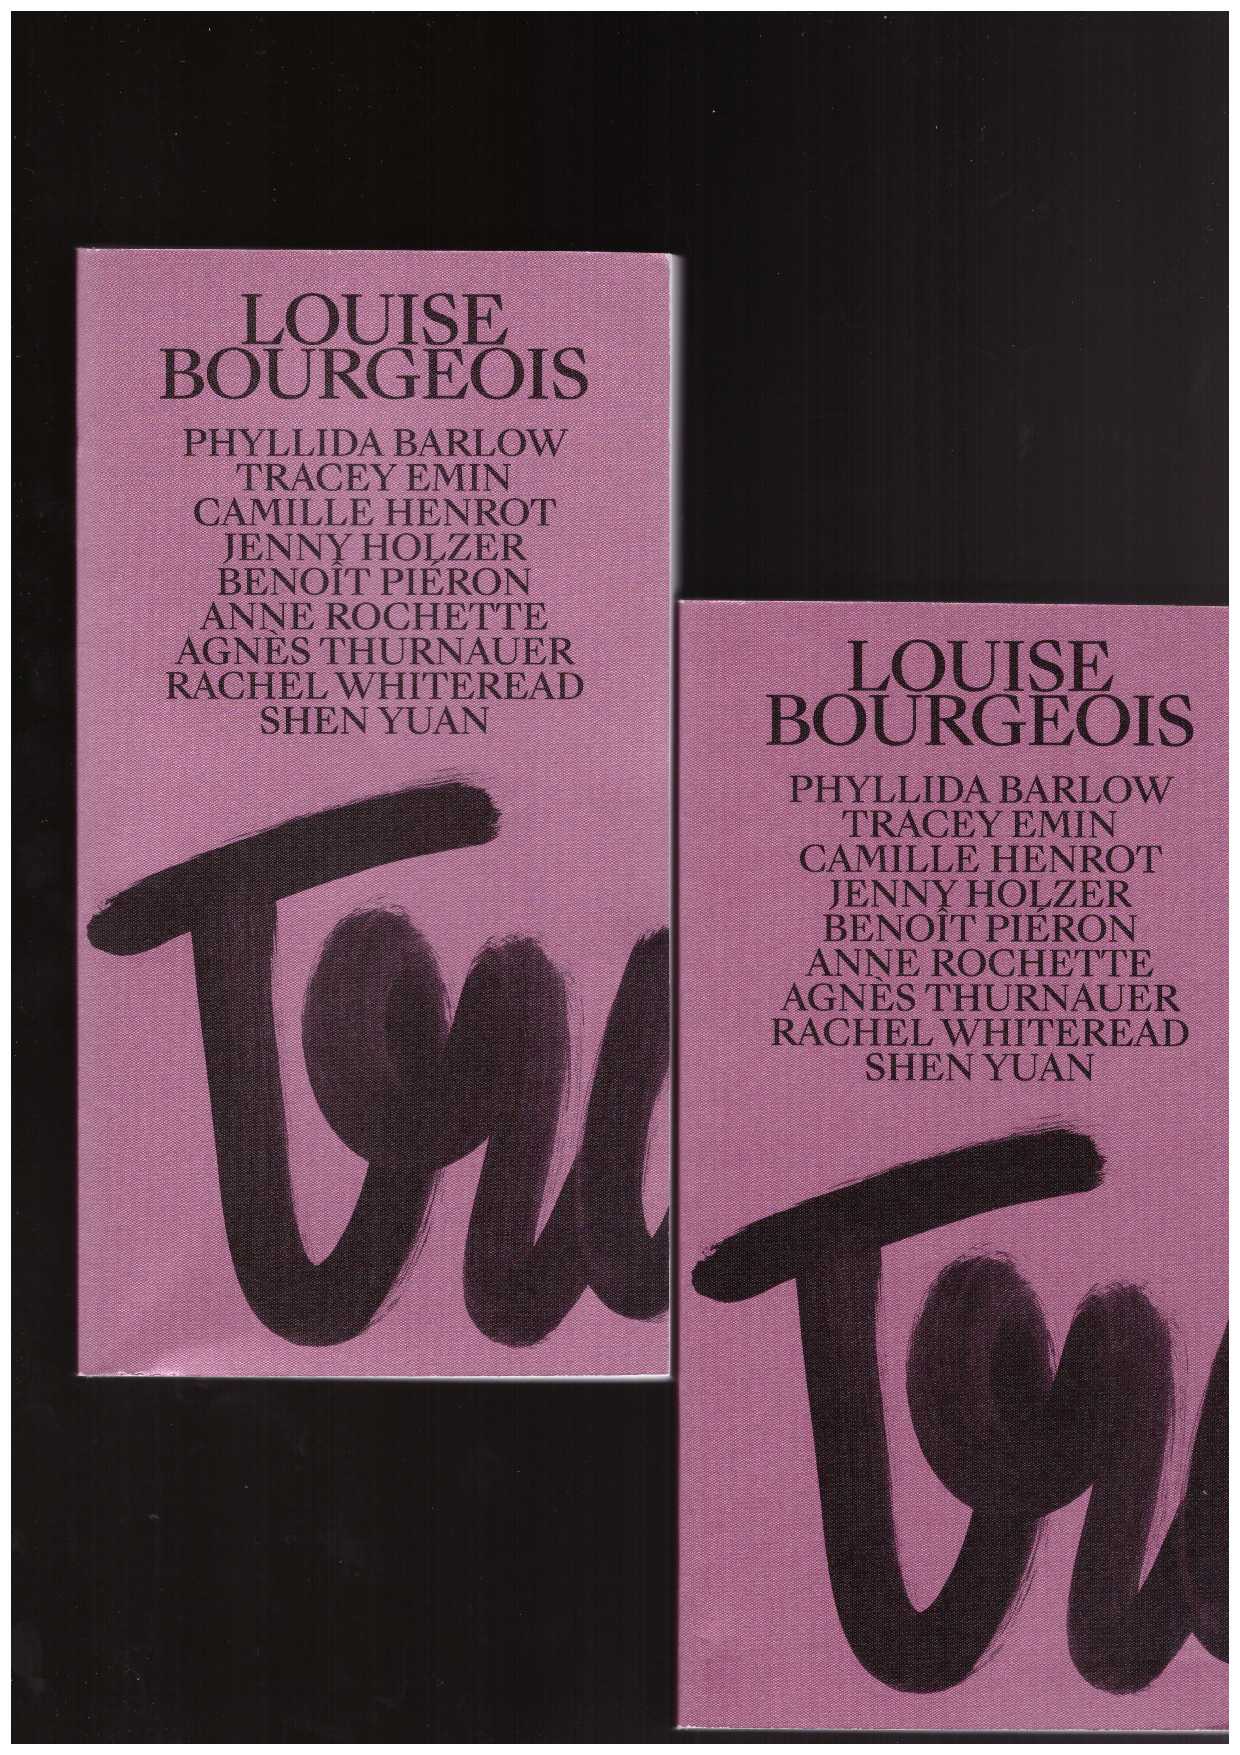 BERNADAC, Marie-Laure (ed.) - Louise Bourgeois. Transatlantique